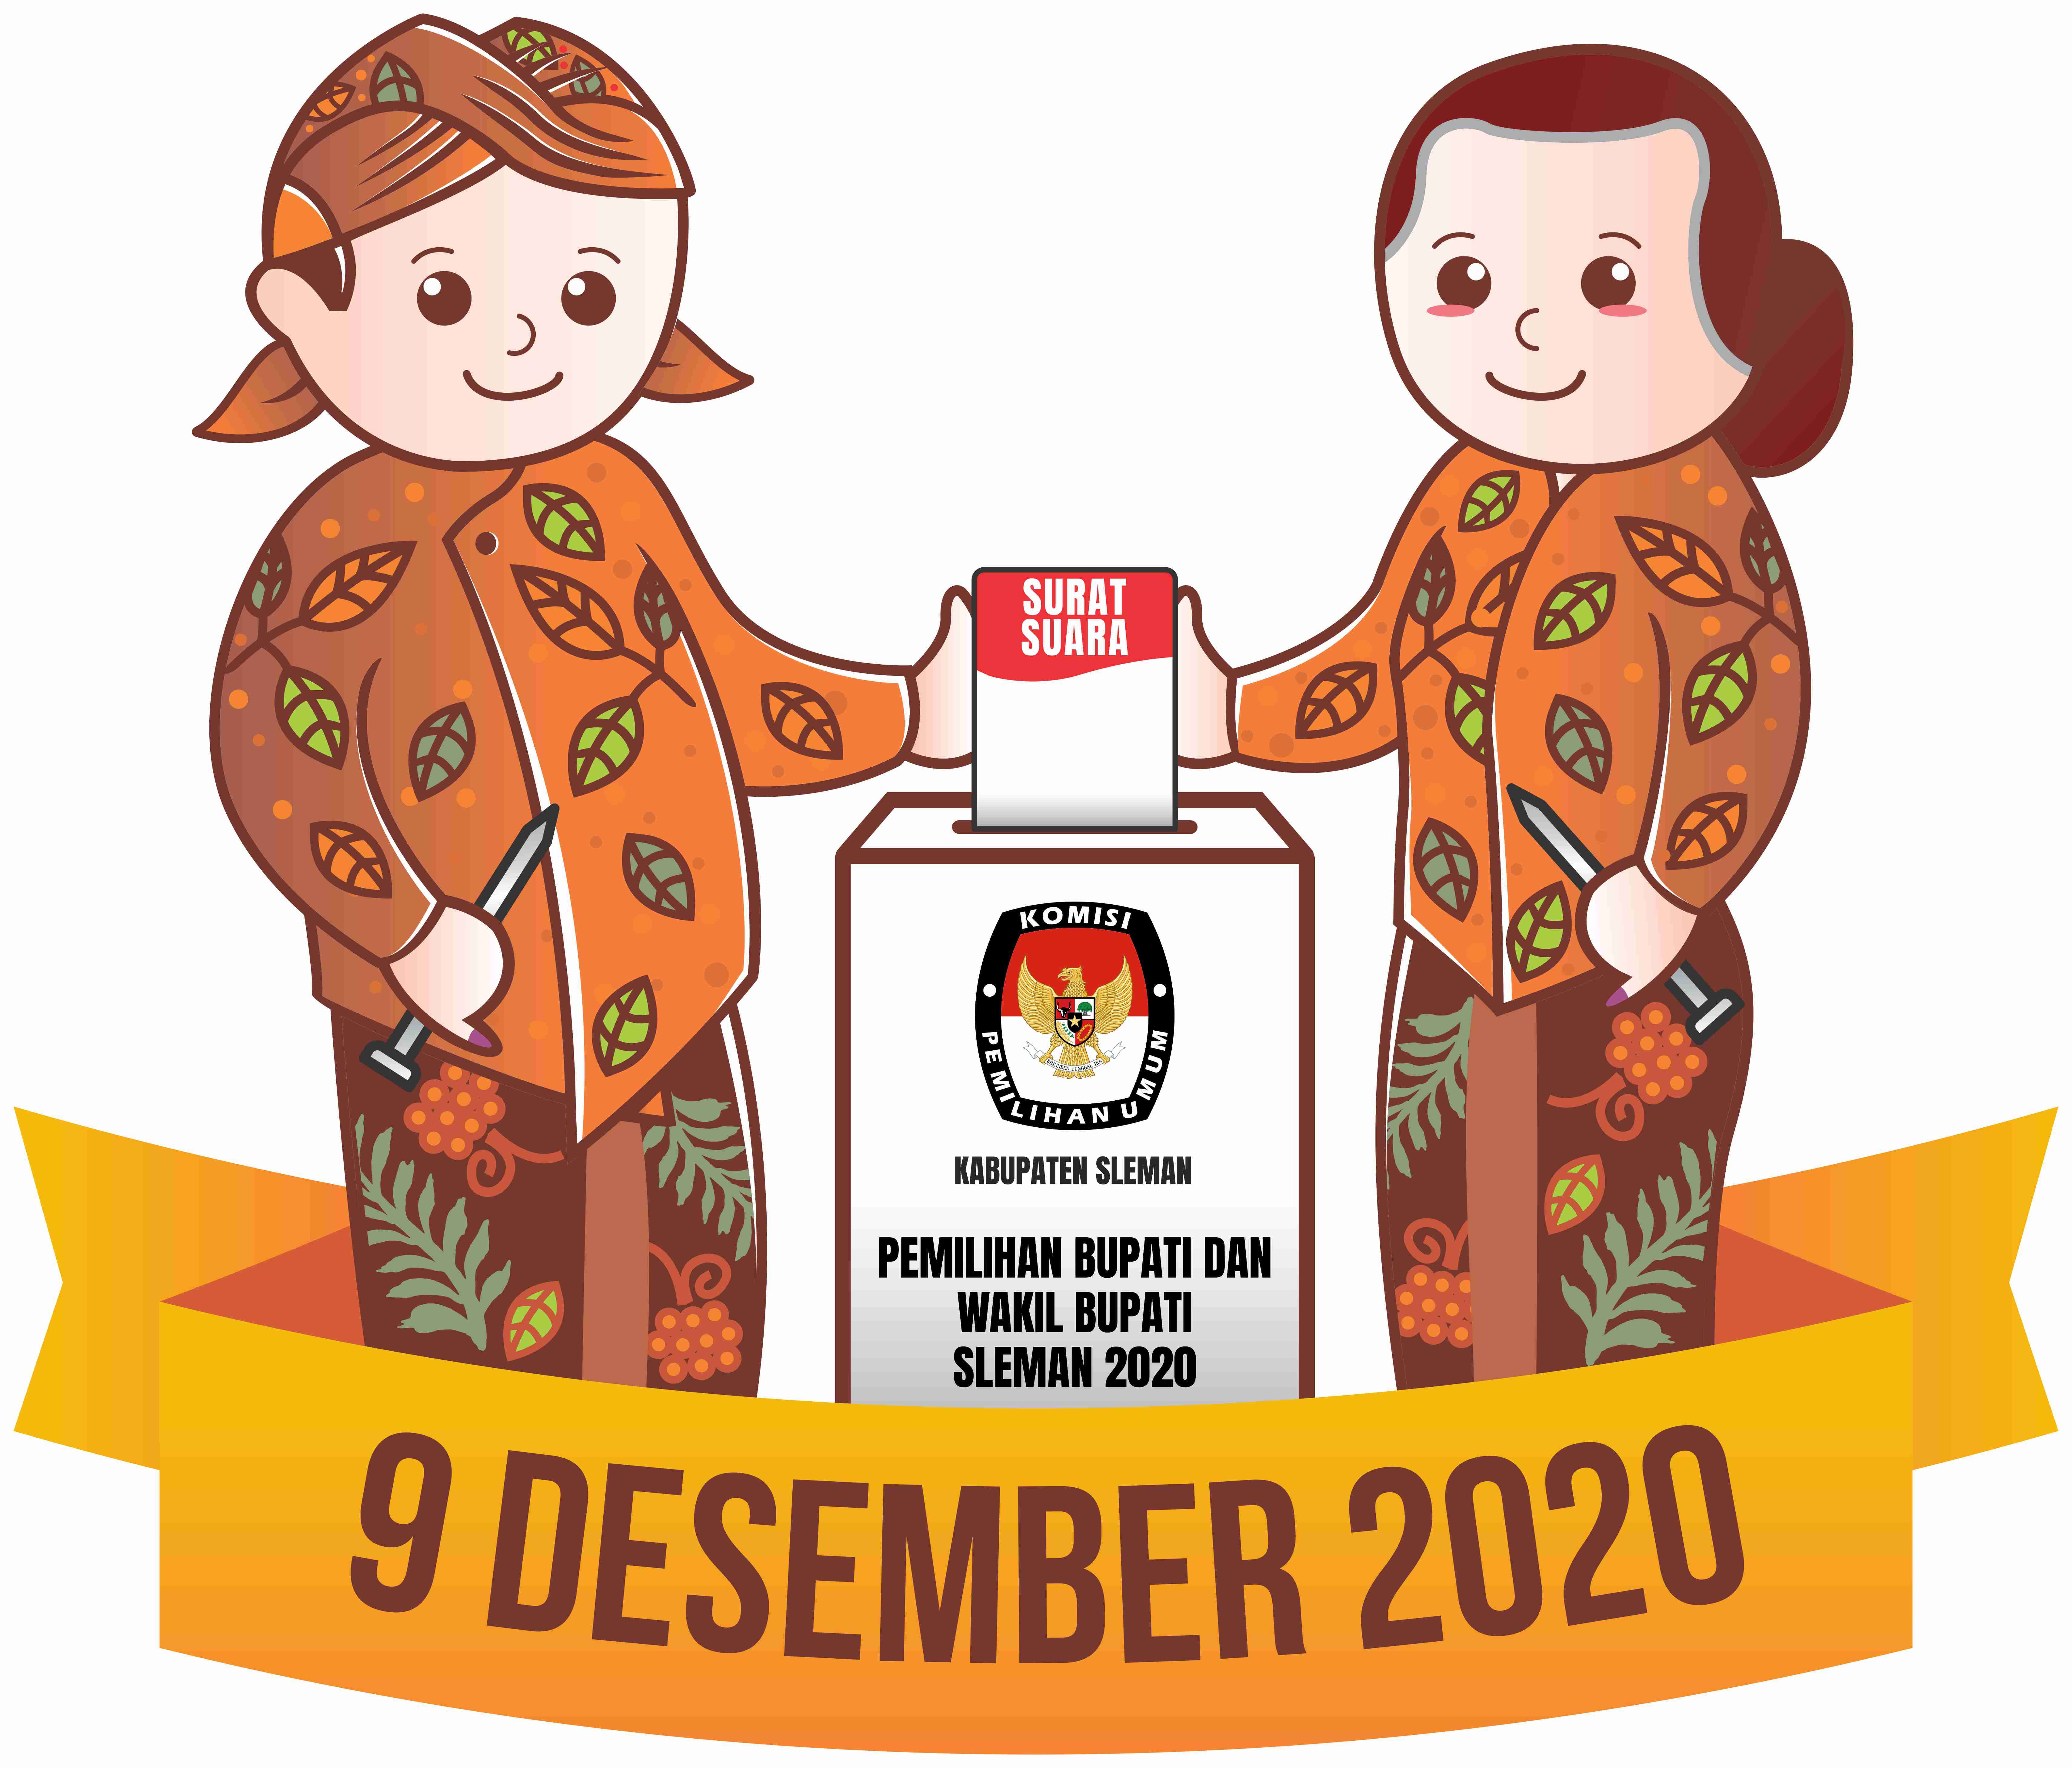 Maskot Pemilihan Bupati Dan Wakil Bupati Sleman Tahun 2020 (9 Desember 2020)